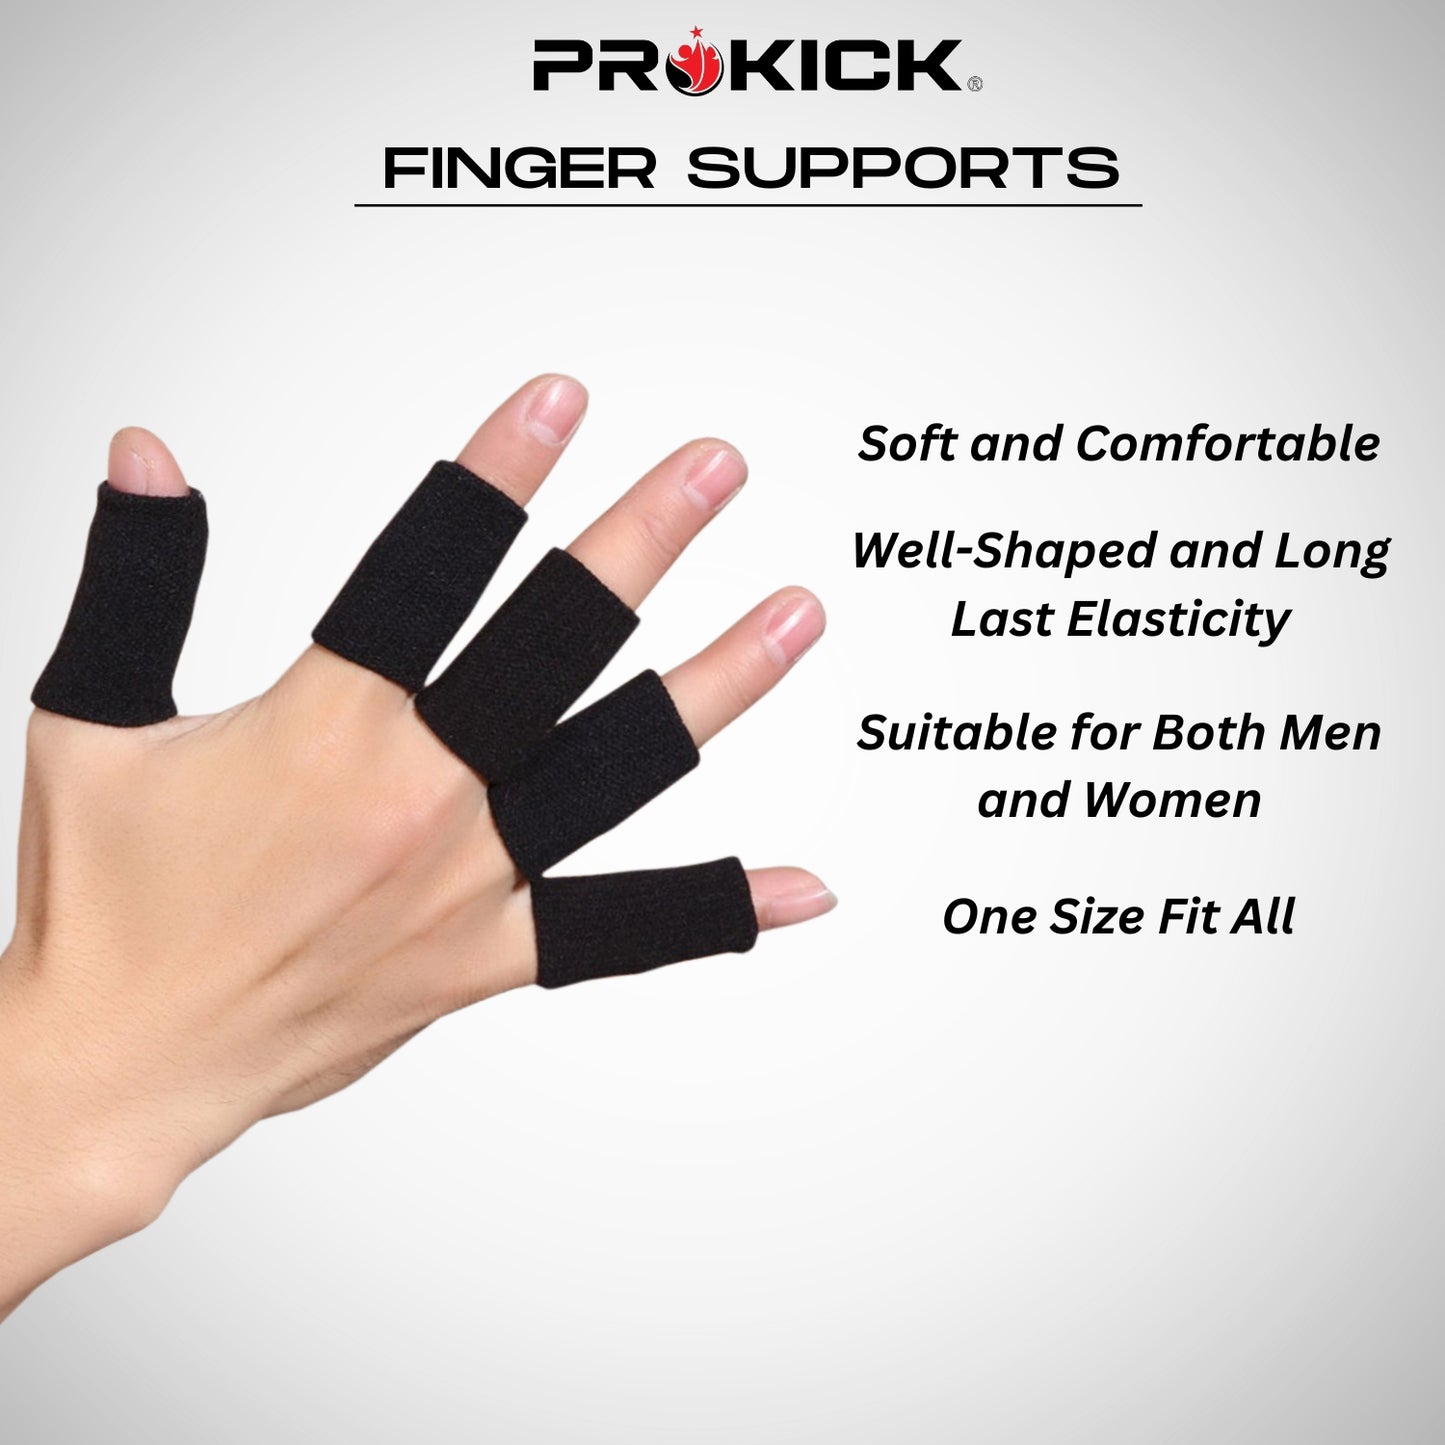 Prokick Finger Support - Pack of 5 (Black) - Best Price online Prokicksports.com